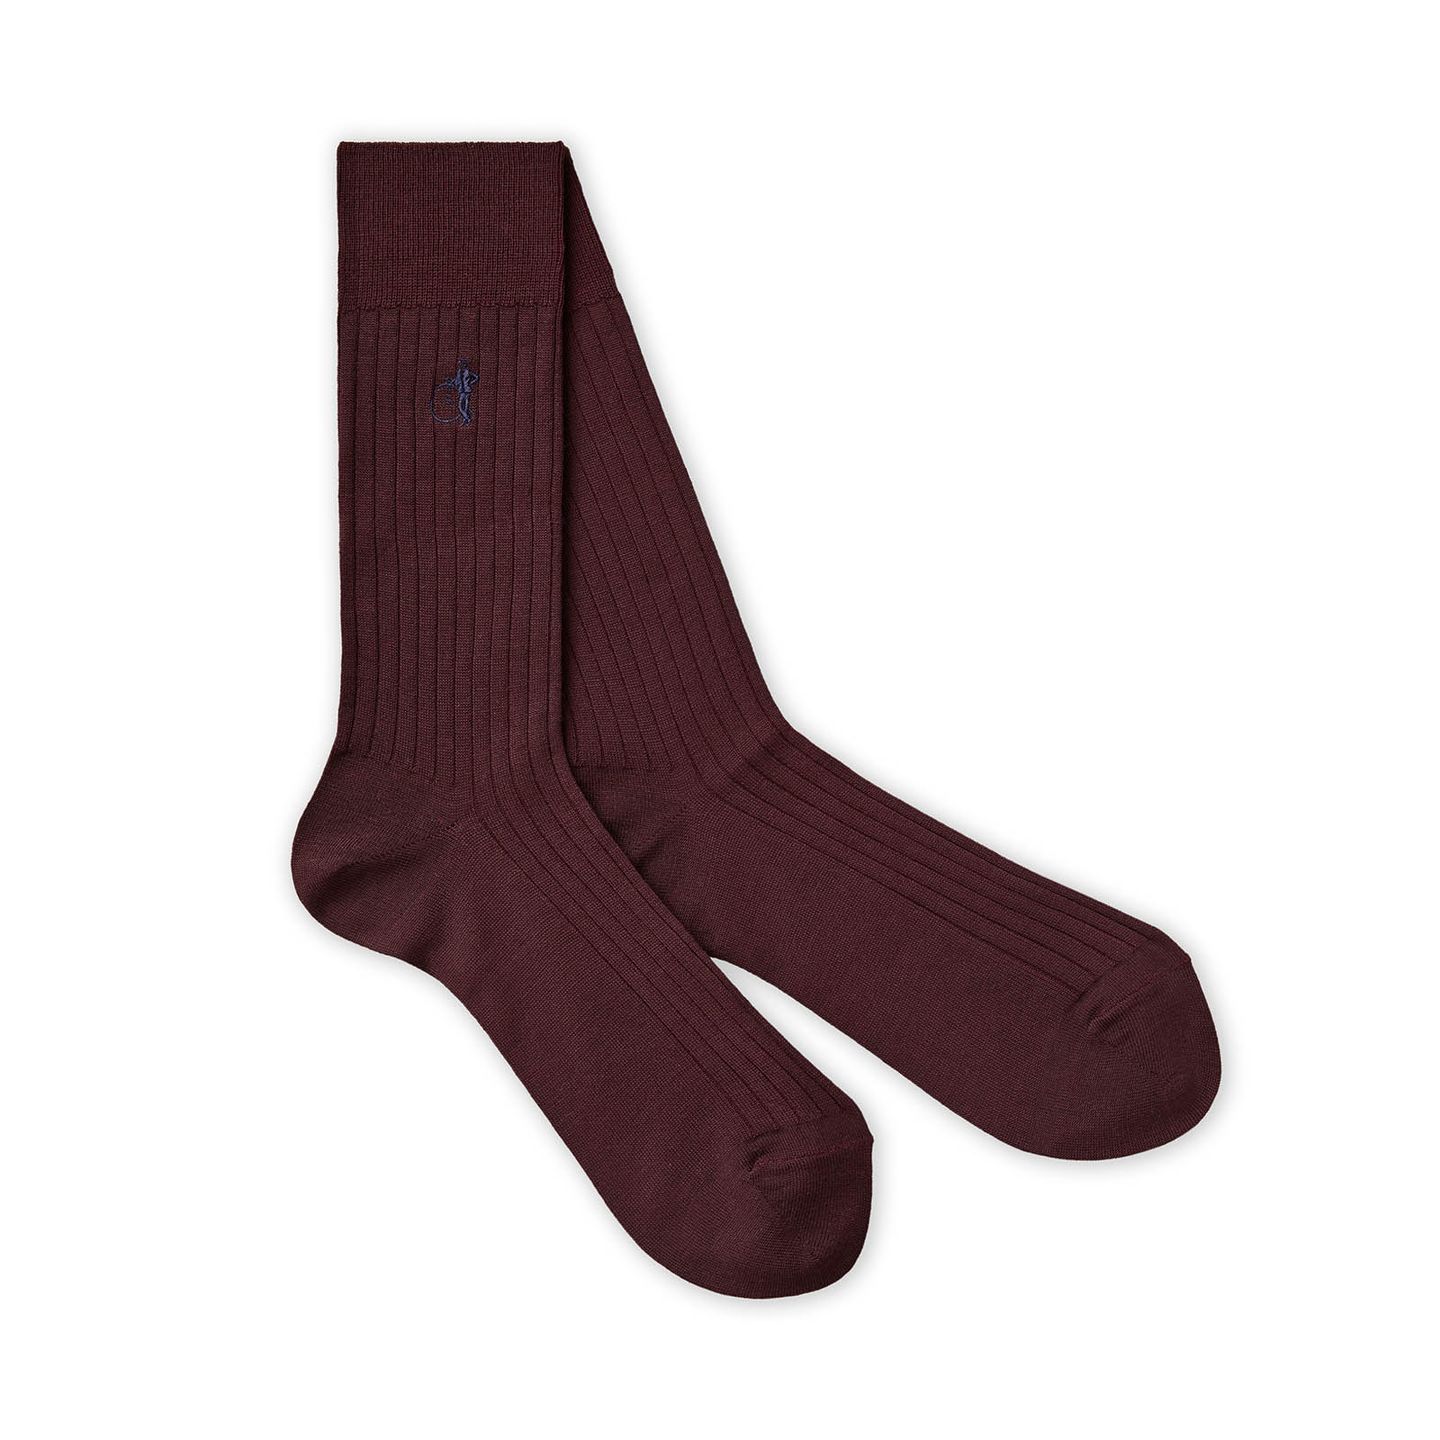 Pair of dark burgundy socks